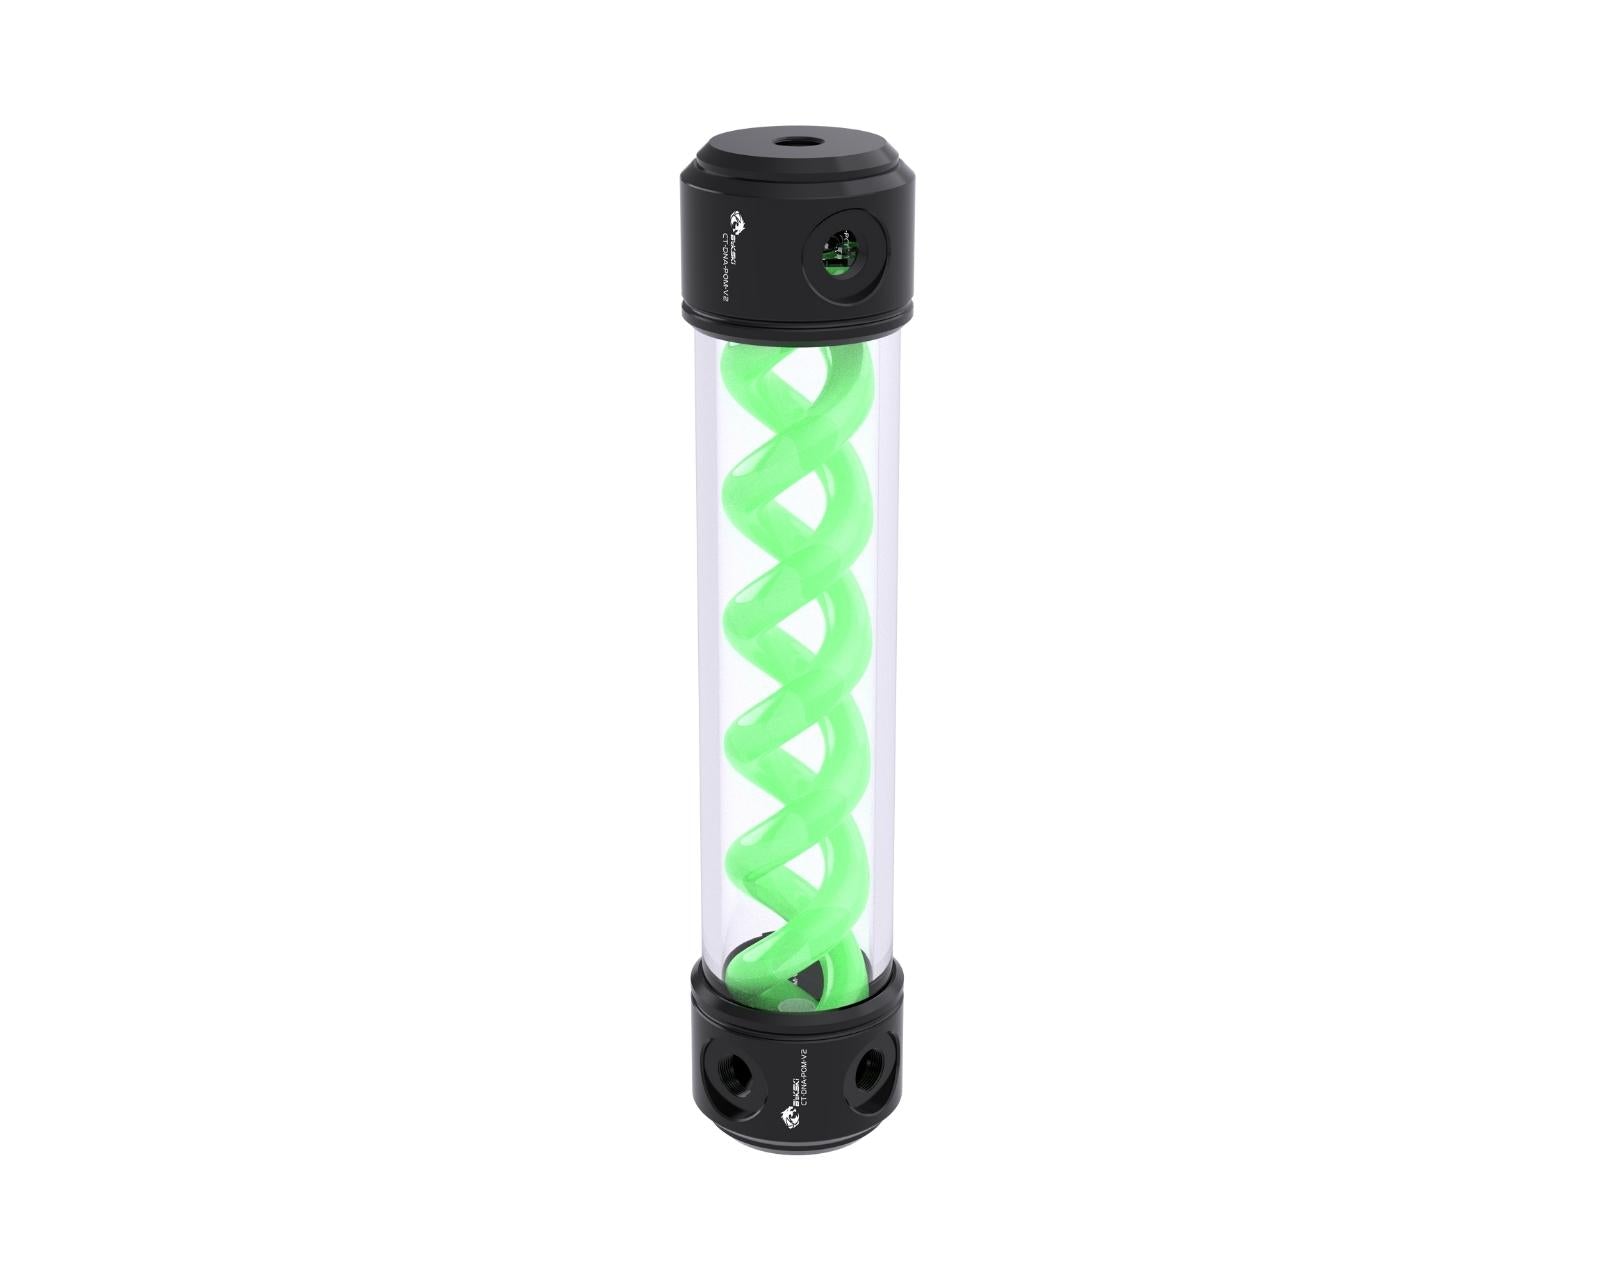 Bykski 50mm Cylindrical DNA Reservoir - Black POM - 260mm w/ LED strip (CT-DNA-POM-V2-260) - Green